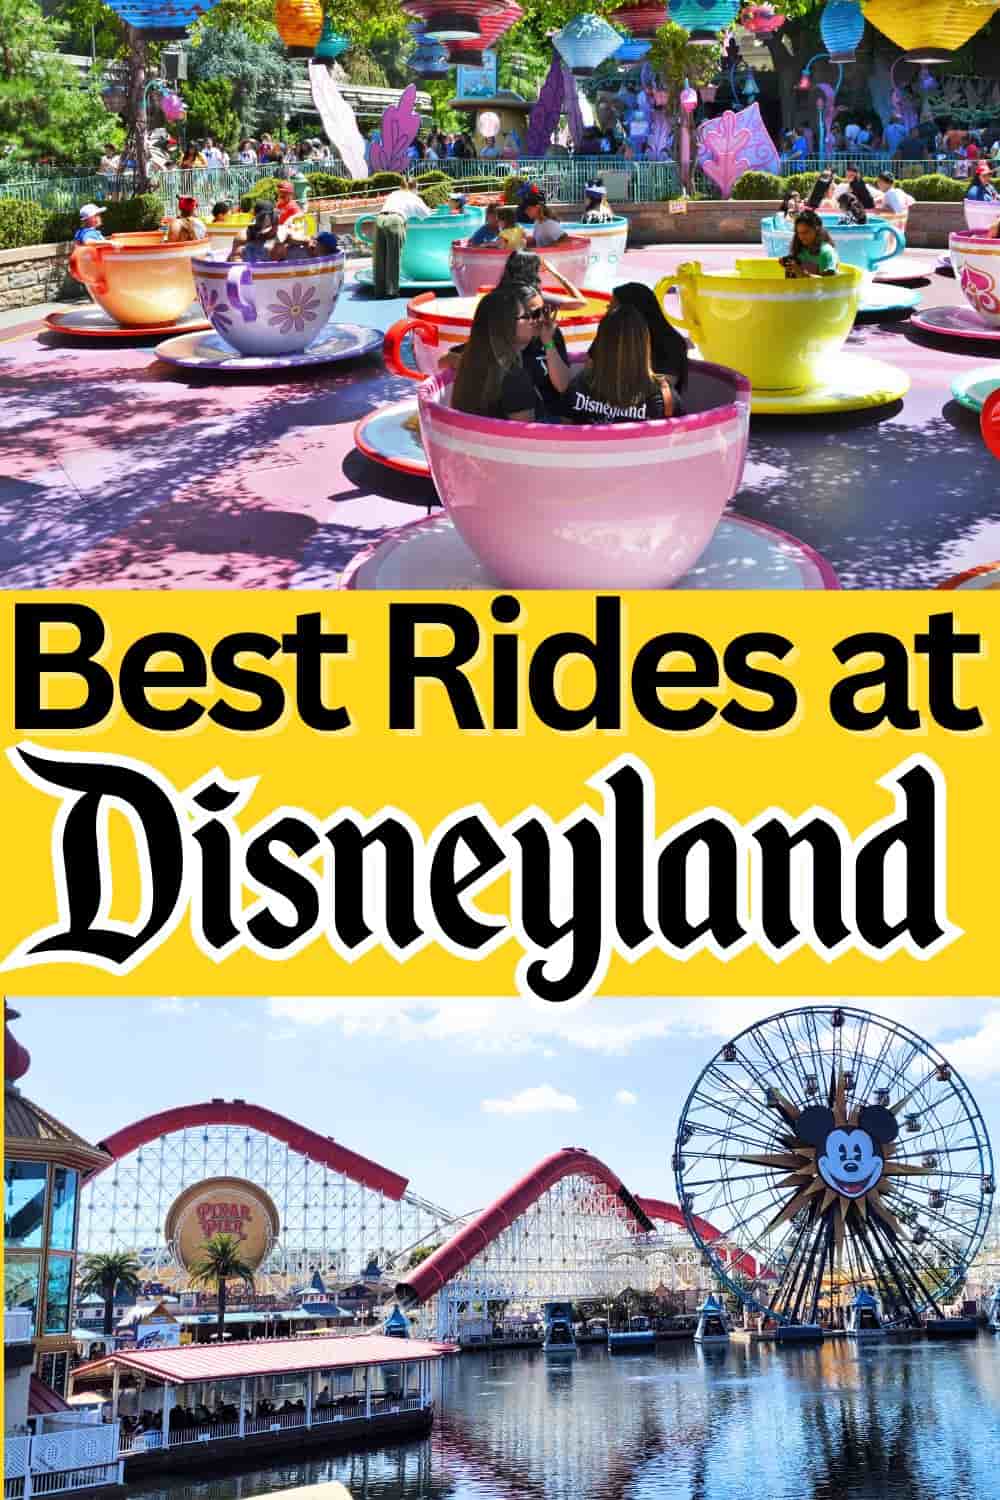  Best Rides at Disneyland & California Adventure